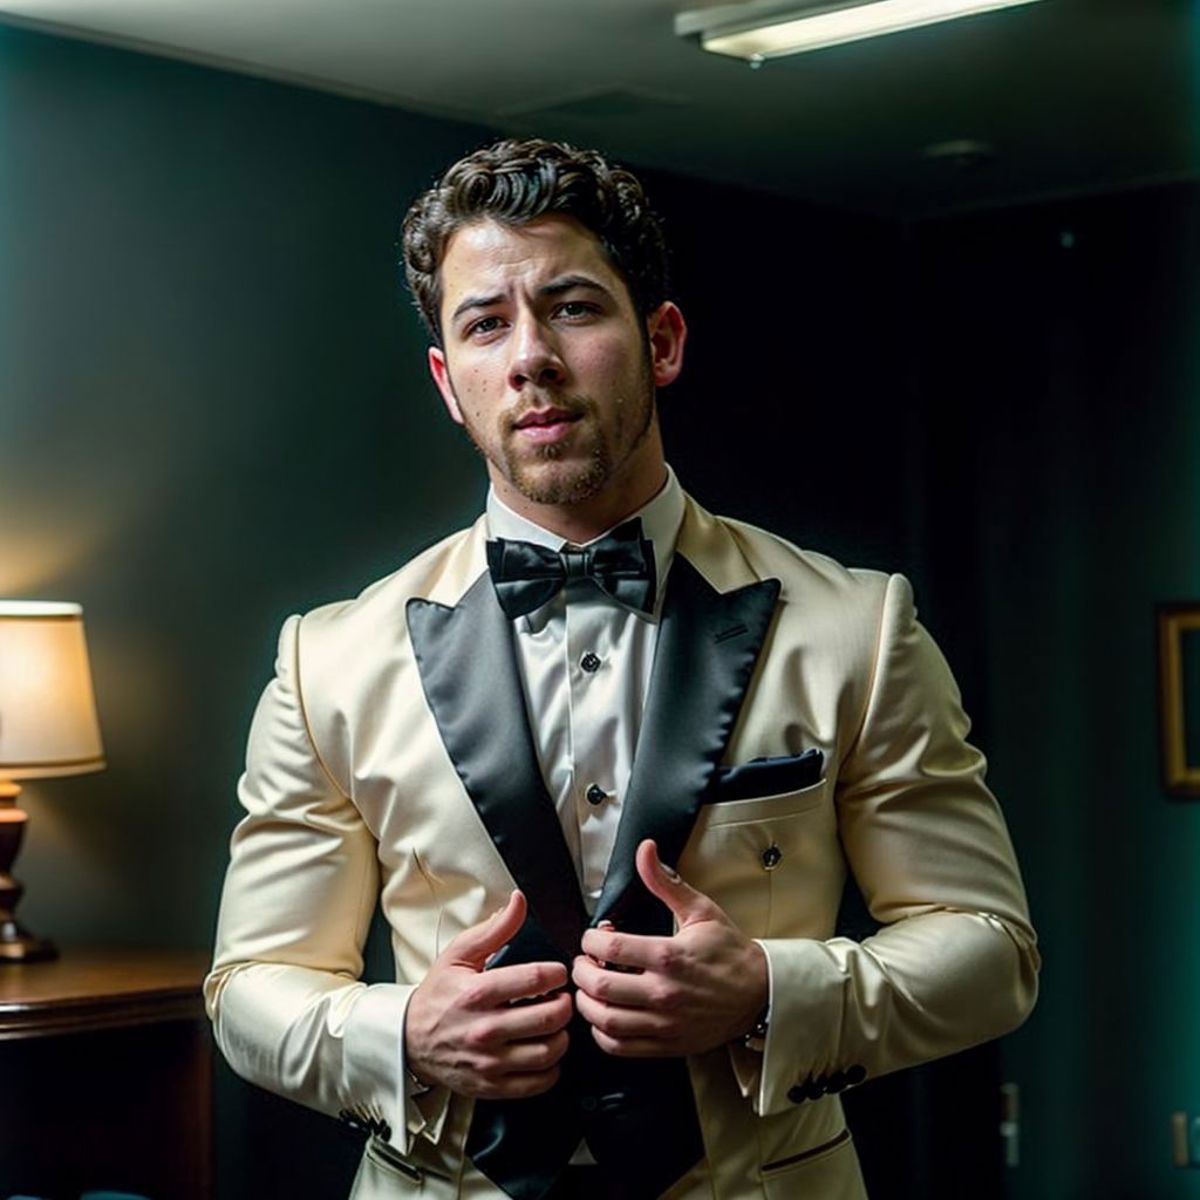 Nick Jonas image by eddnor